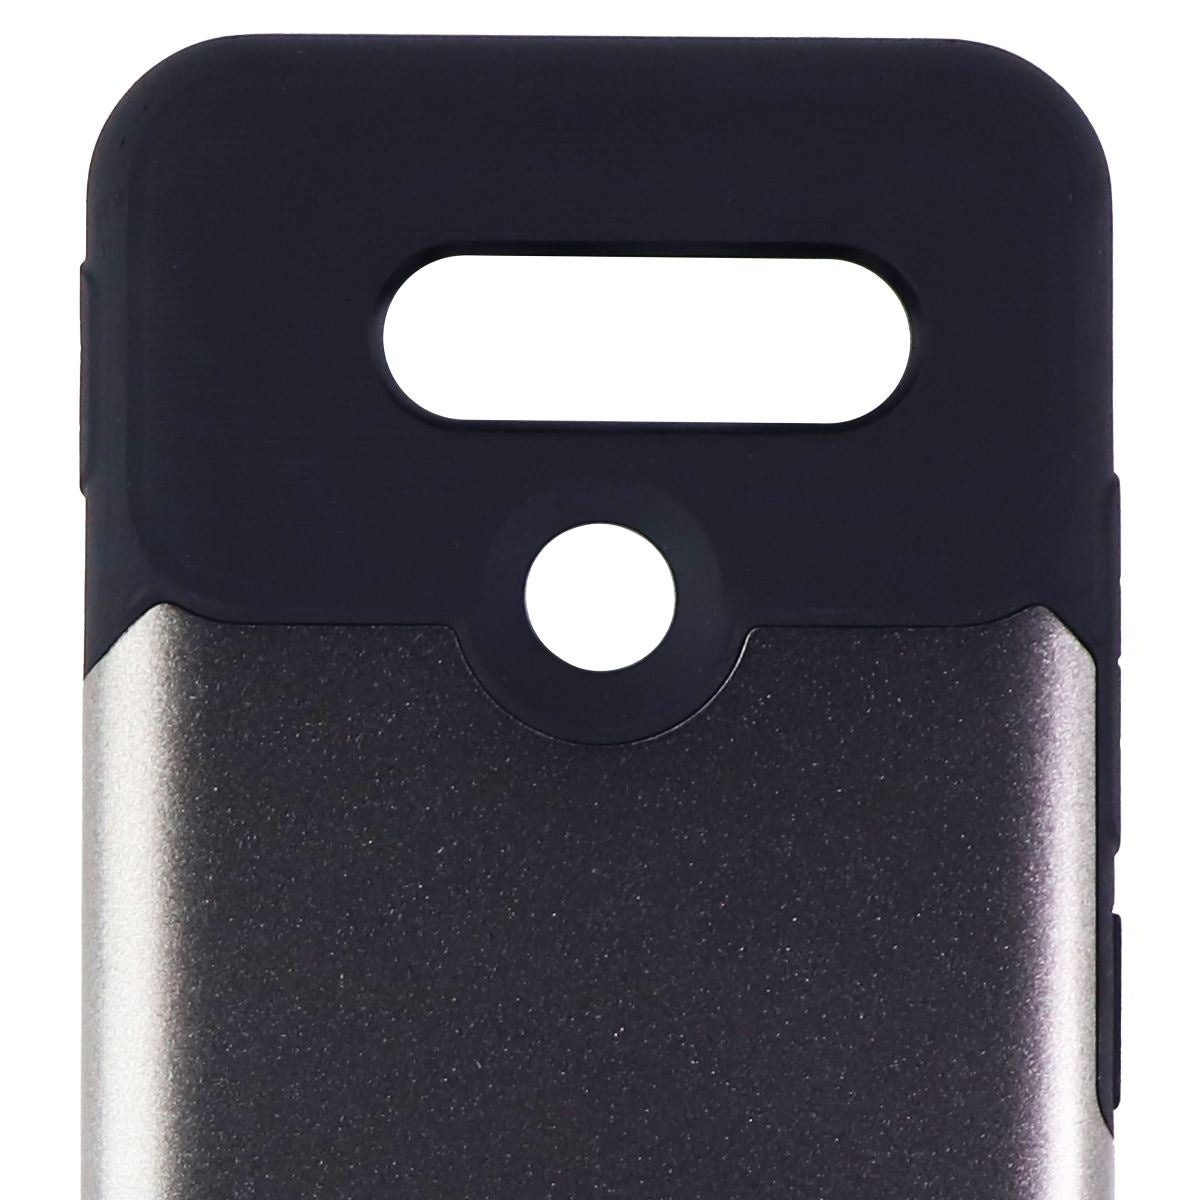 Spigen Slim Armor Series Case with Kickstand for LG Q70 - Gunmetal / Black Cell Phone - Cases, Covers & Skins Spigen    - Simple Cell Bulk Wholesale Pricing - USA Seller